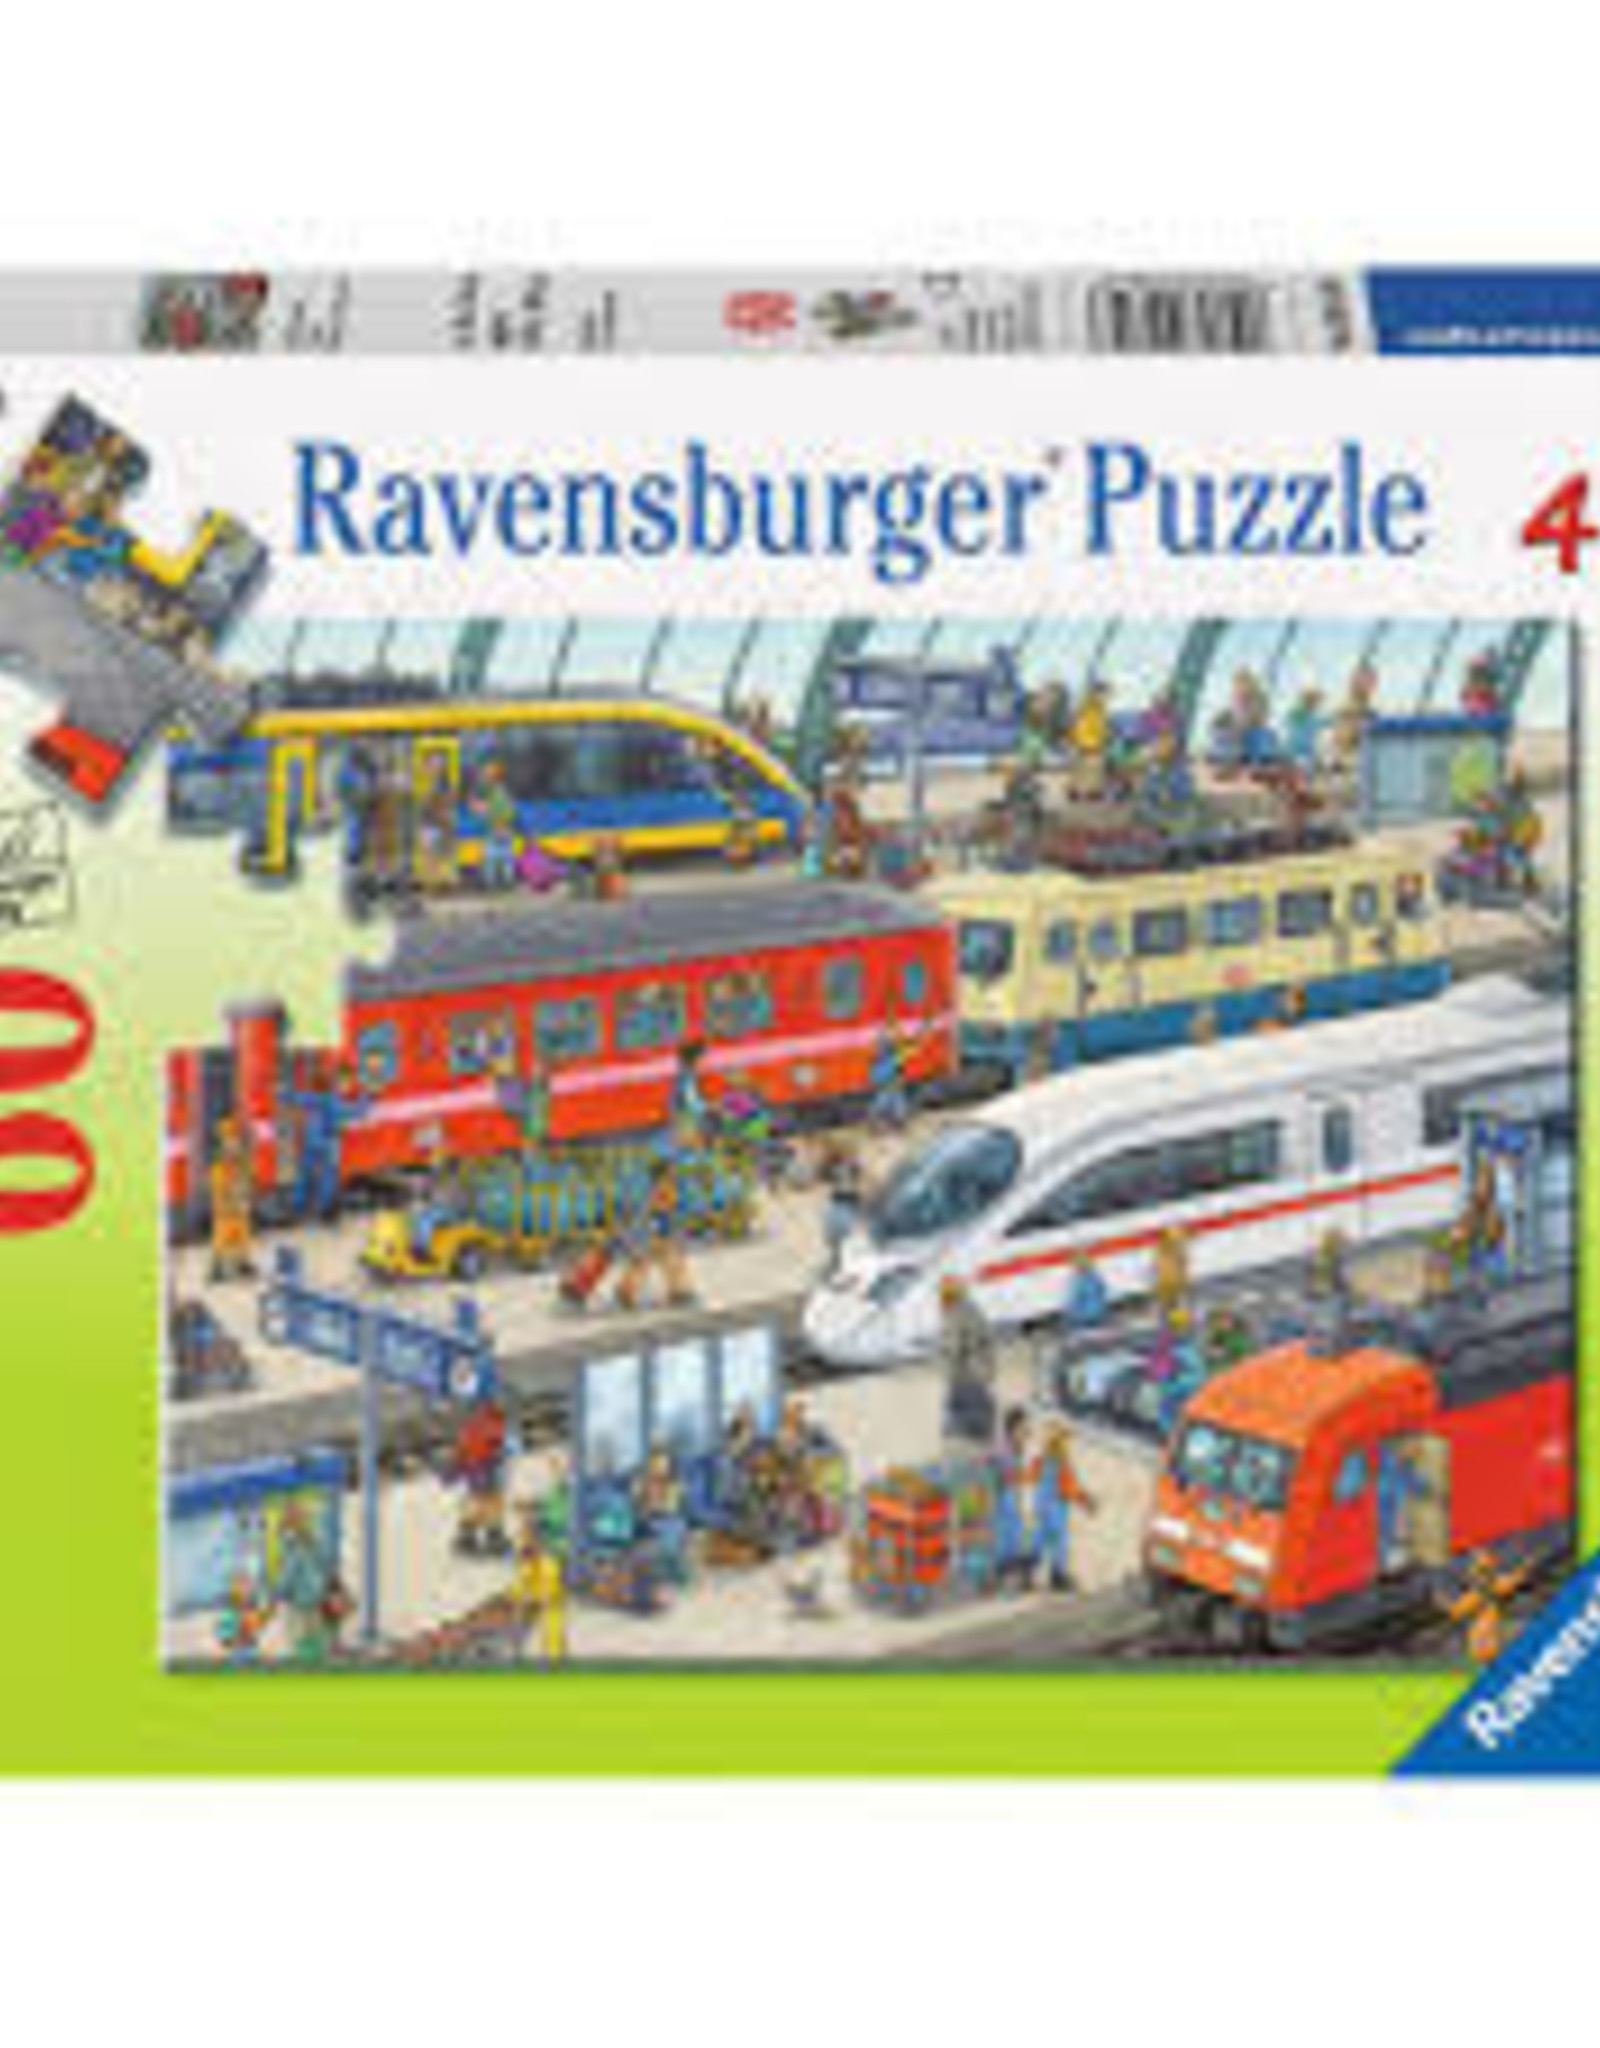 Ravensburger Railway Station 60pc RAV09610